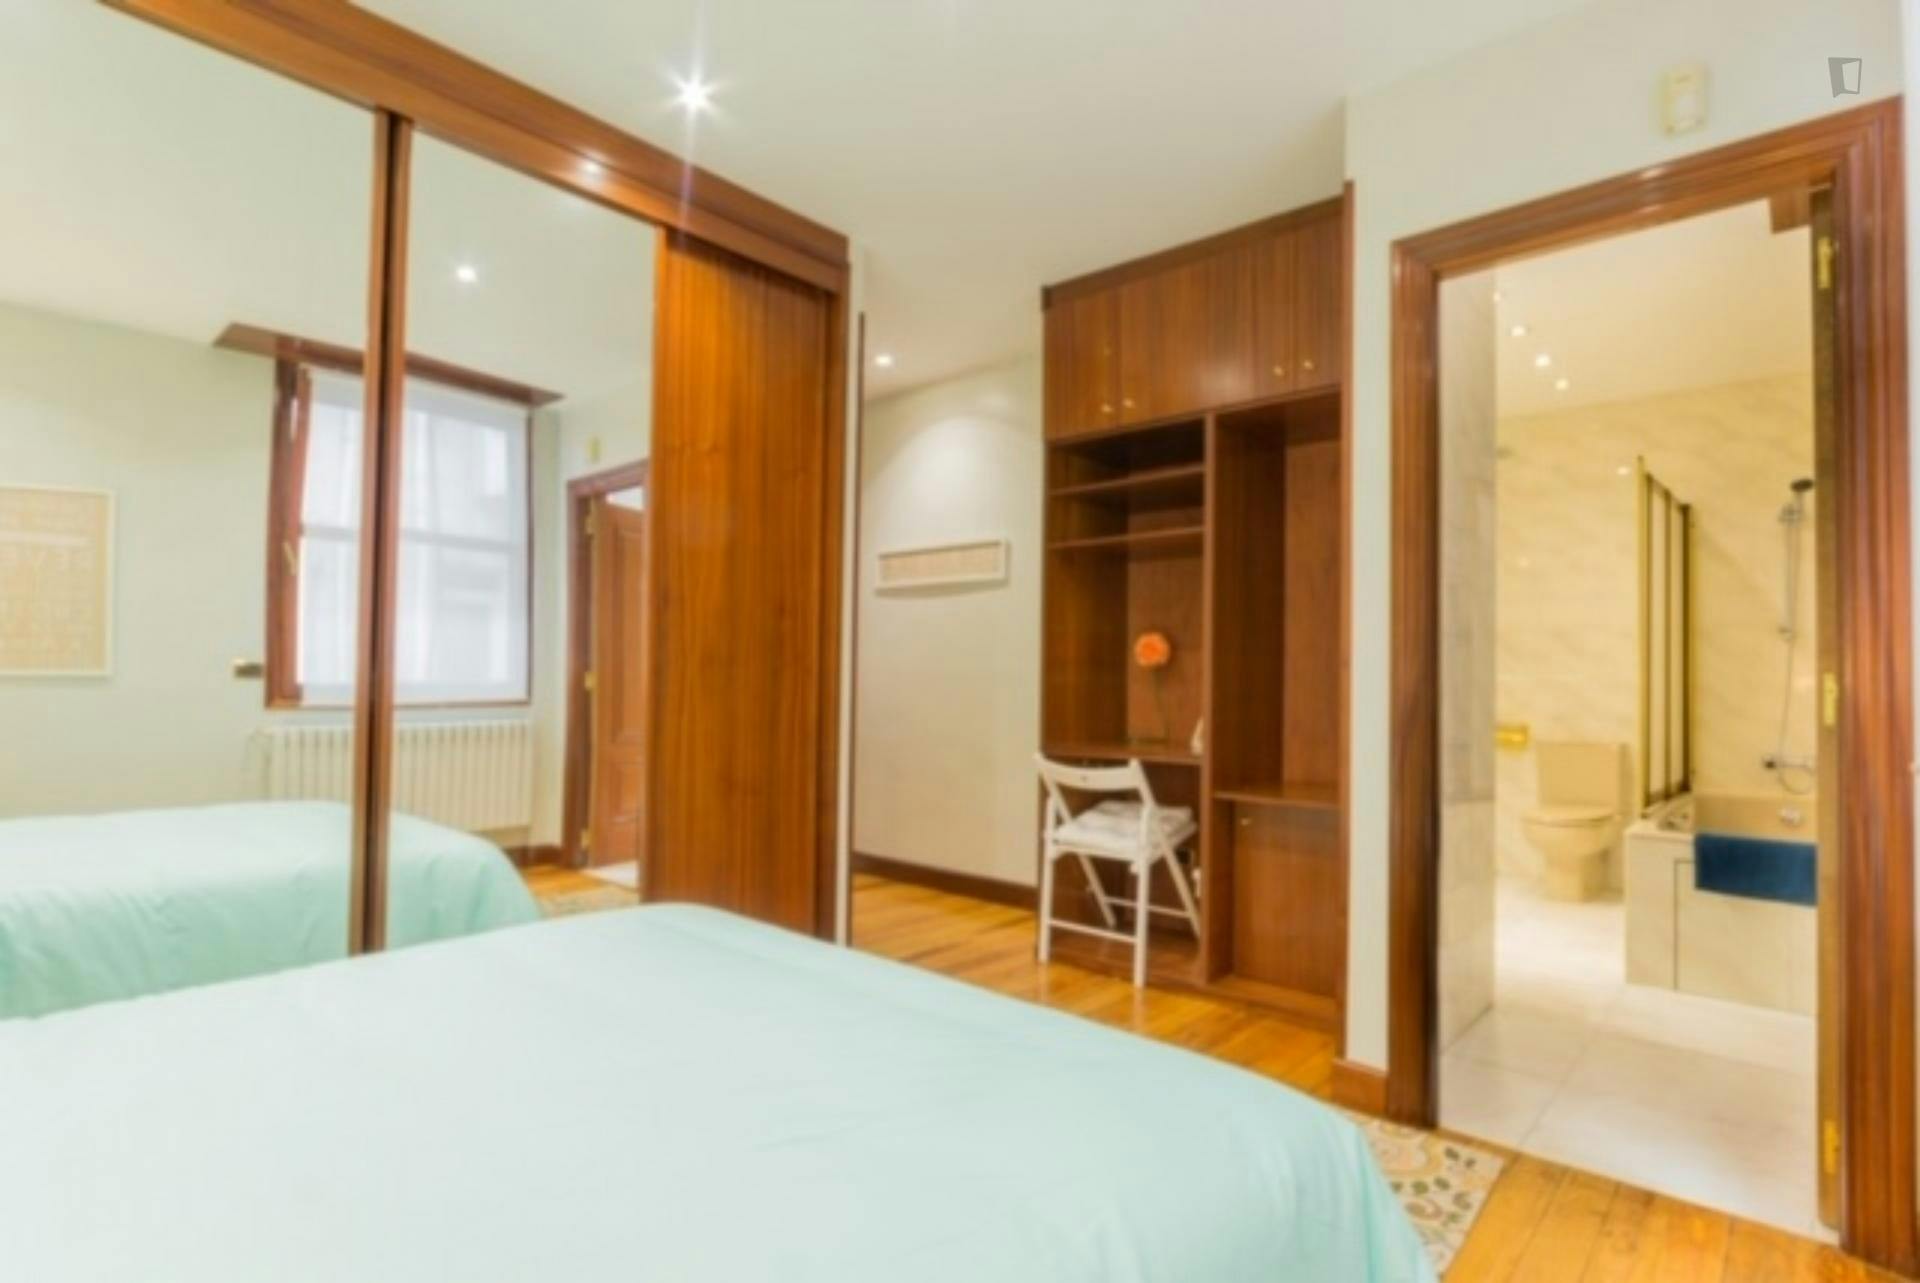 Fantastic double ensuite bedroom in a 5-bedroom apartment near Euskadi Plaza